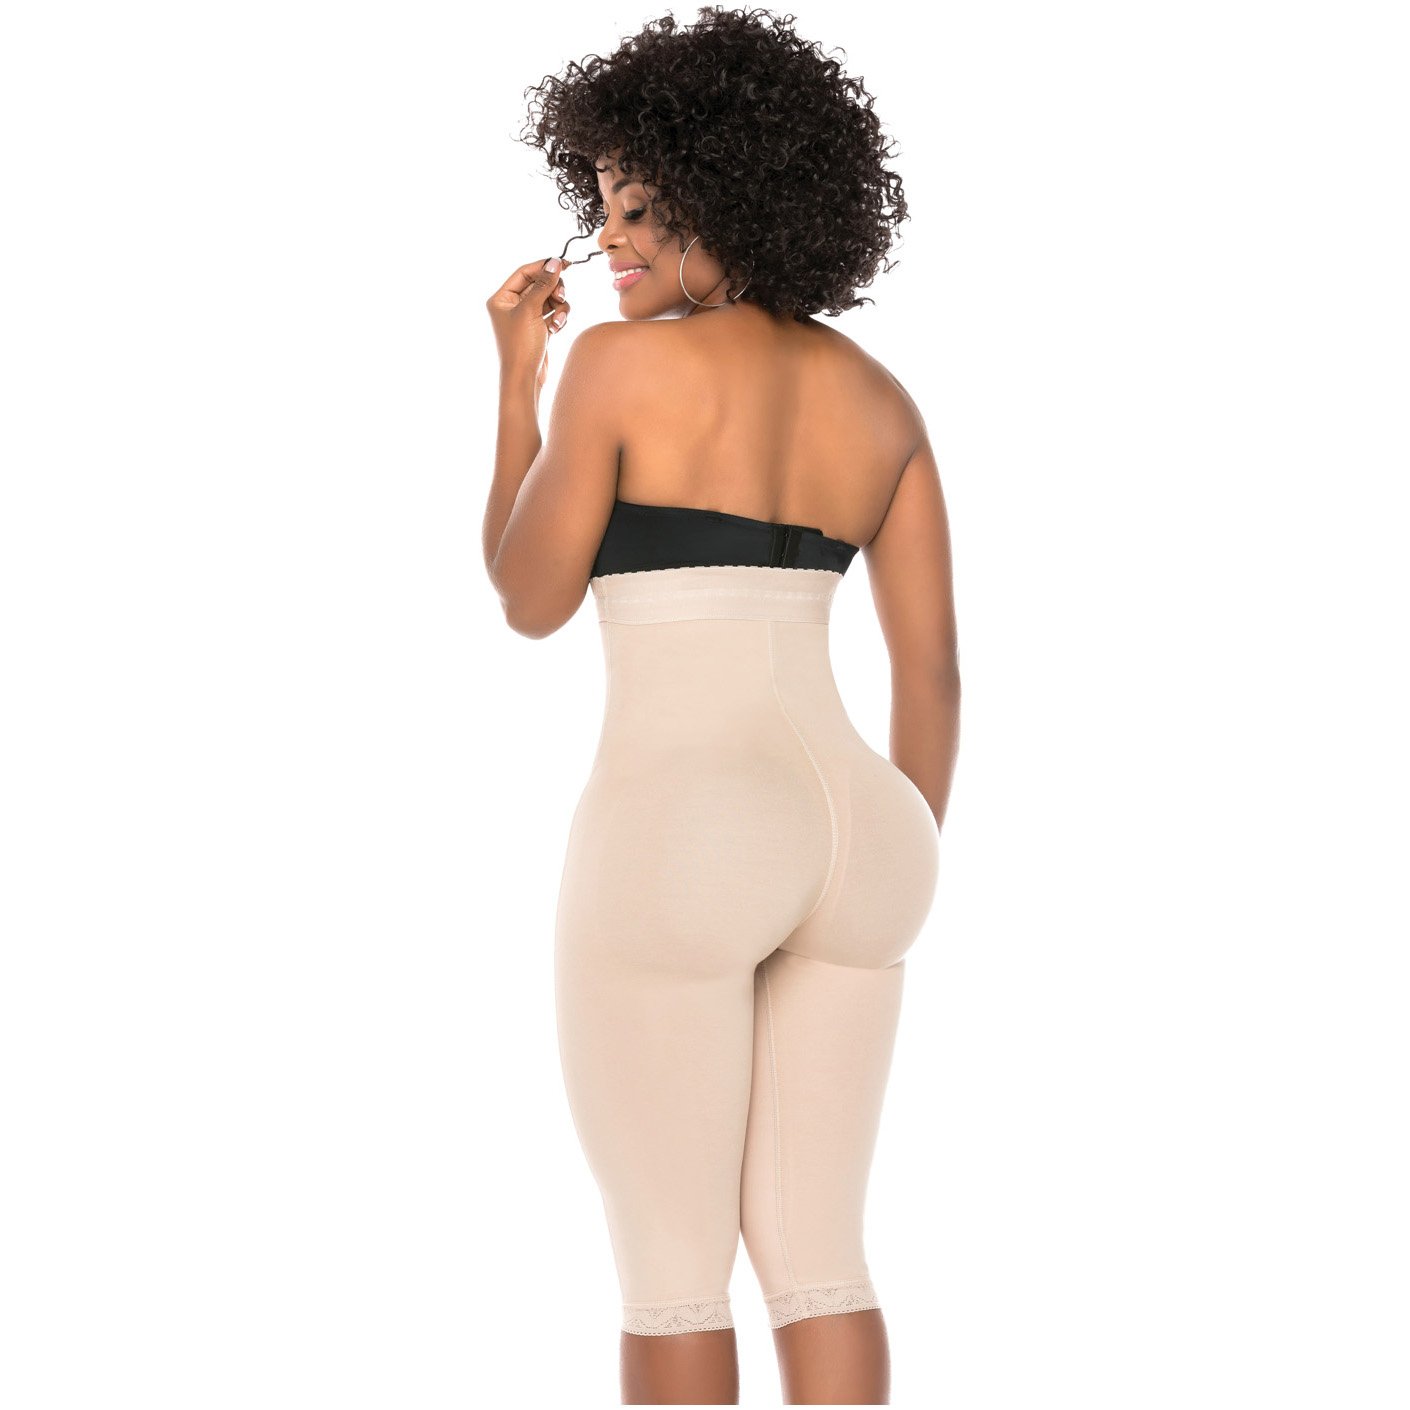 Tummy Control Shapewear Faja Shorts High Compression Butt Lifter